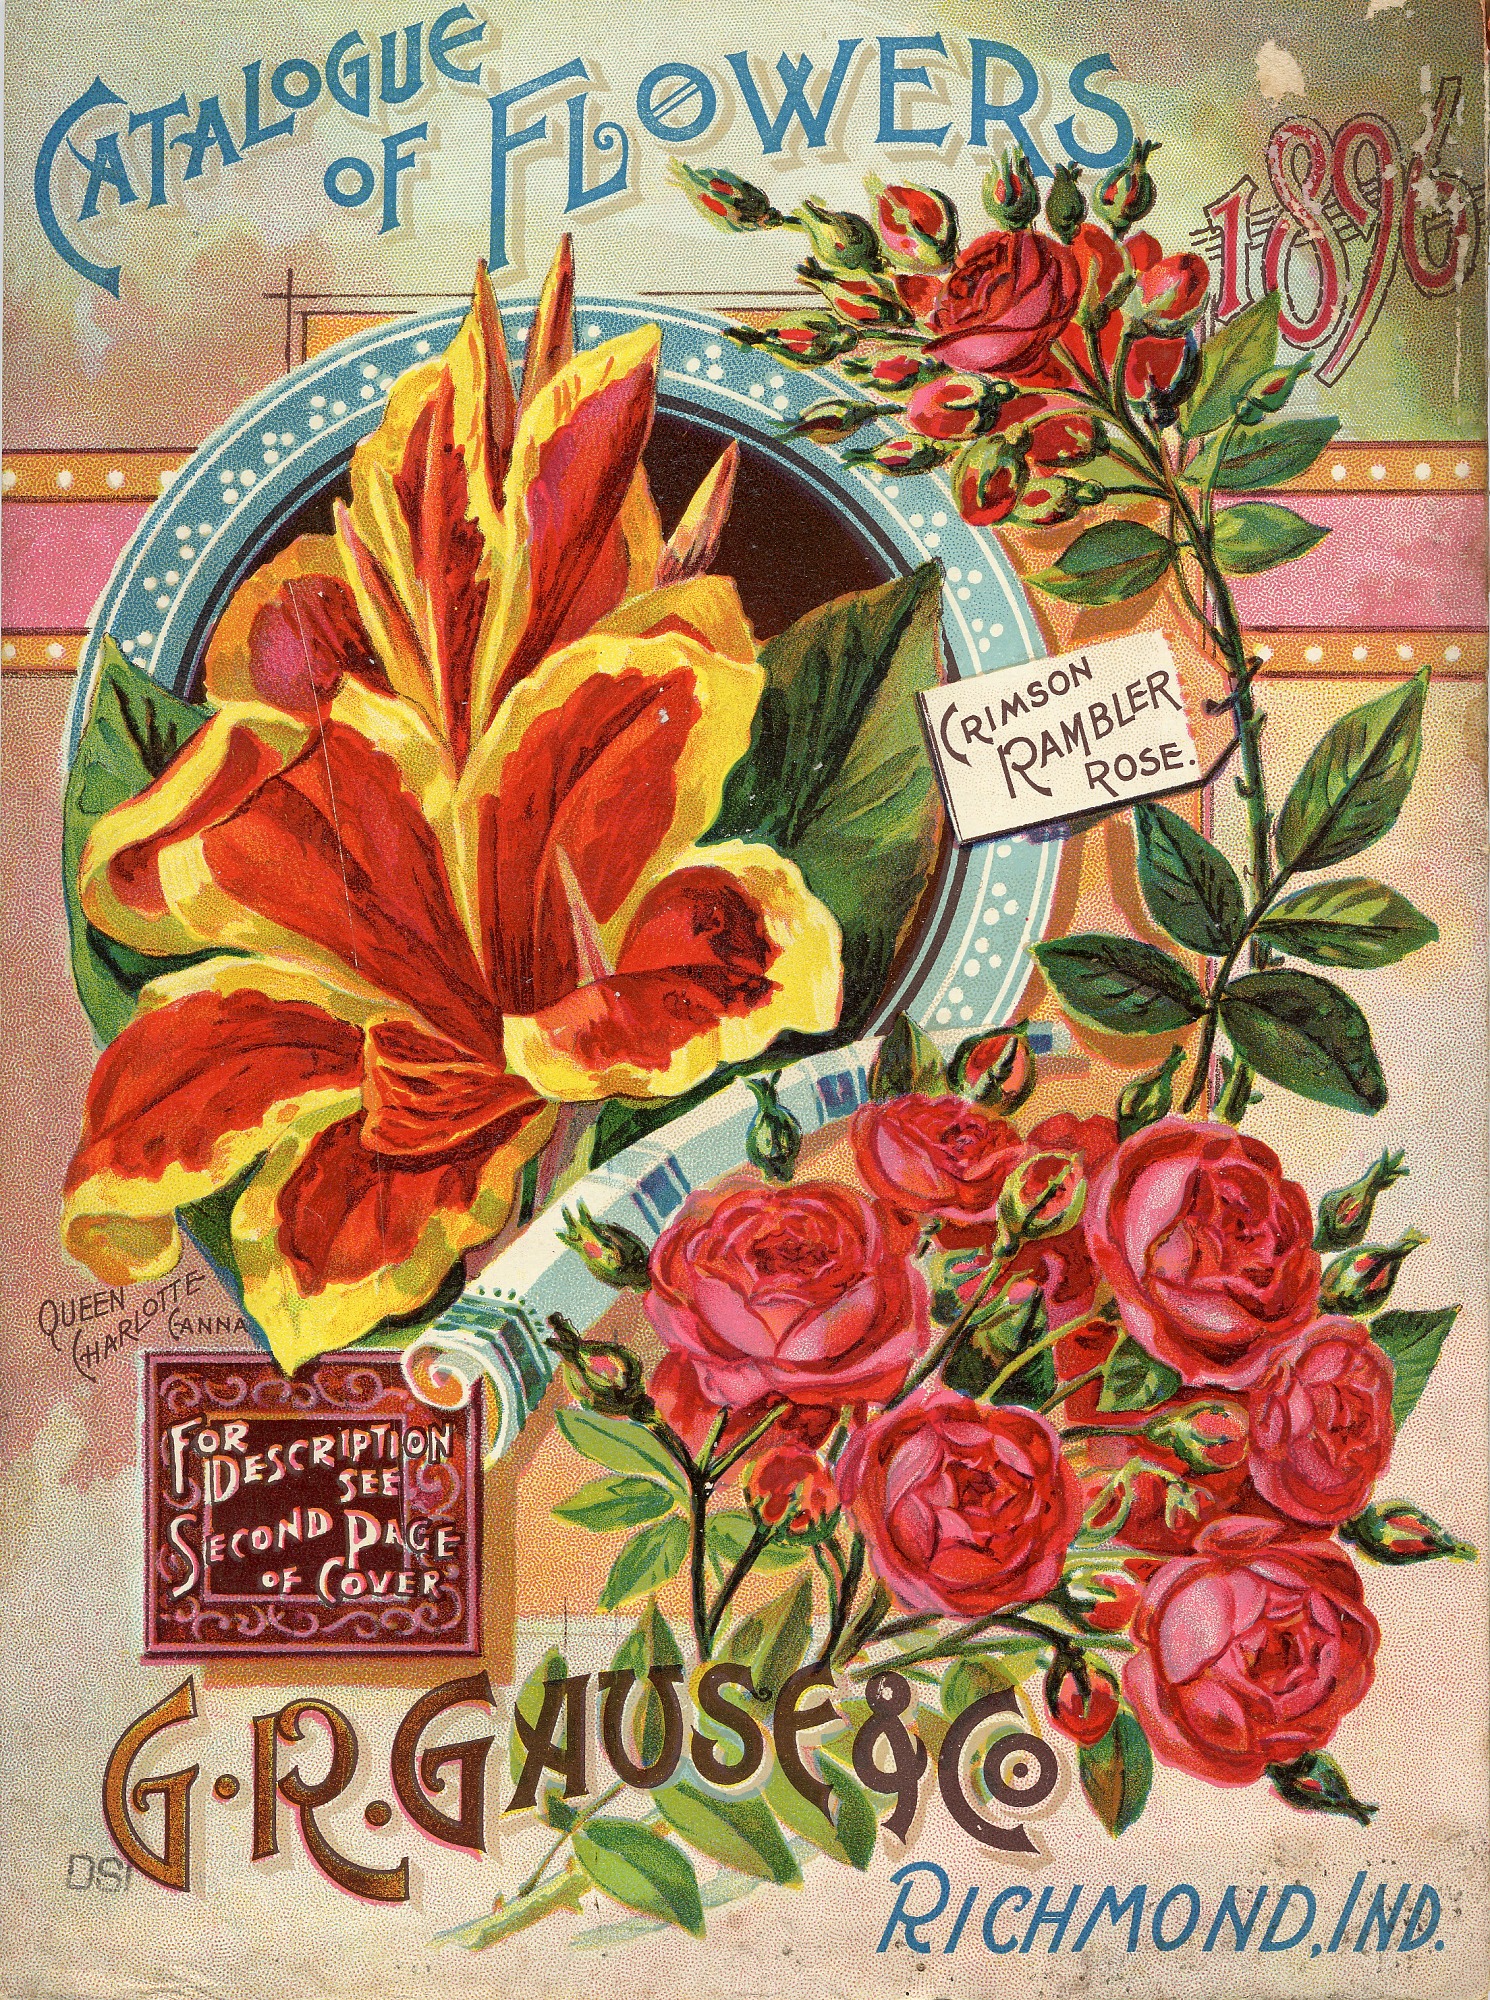 seed catalog image of flowers